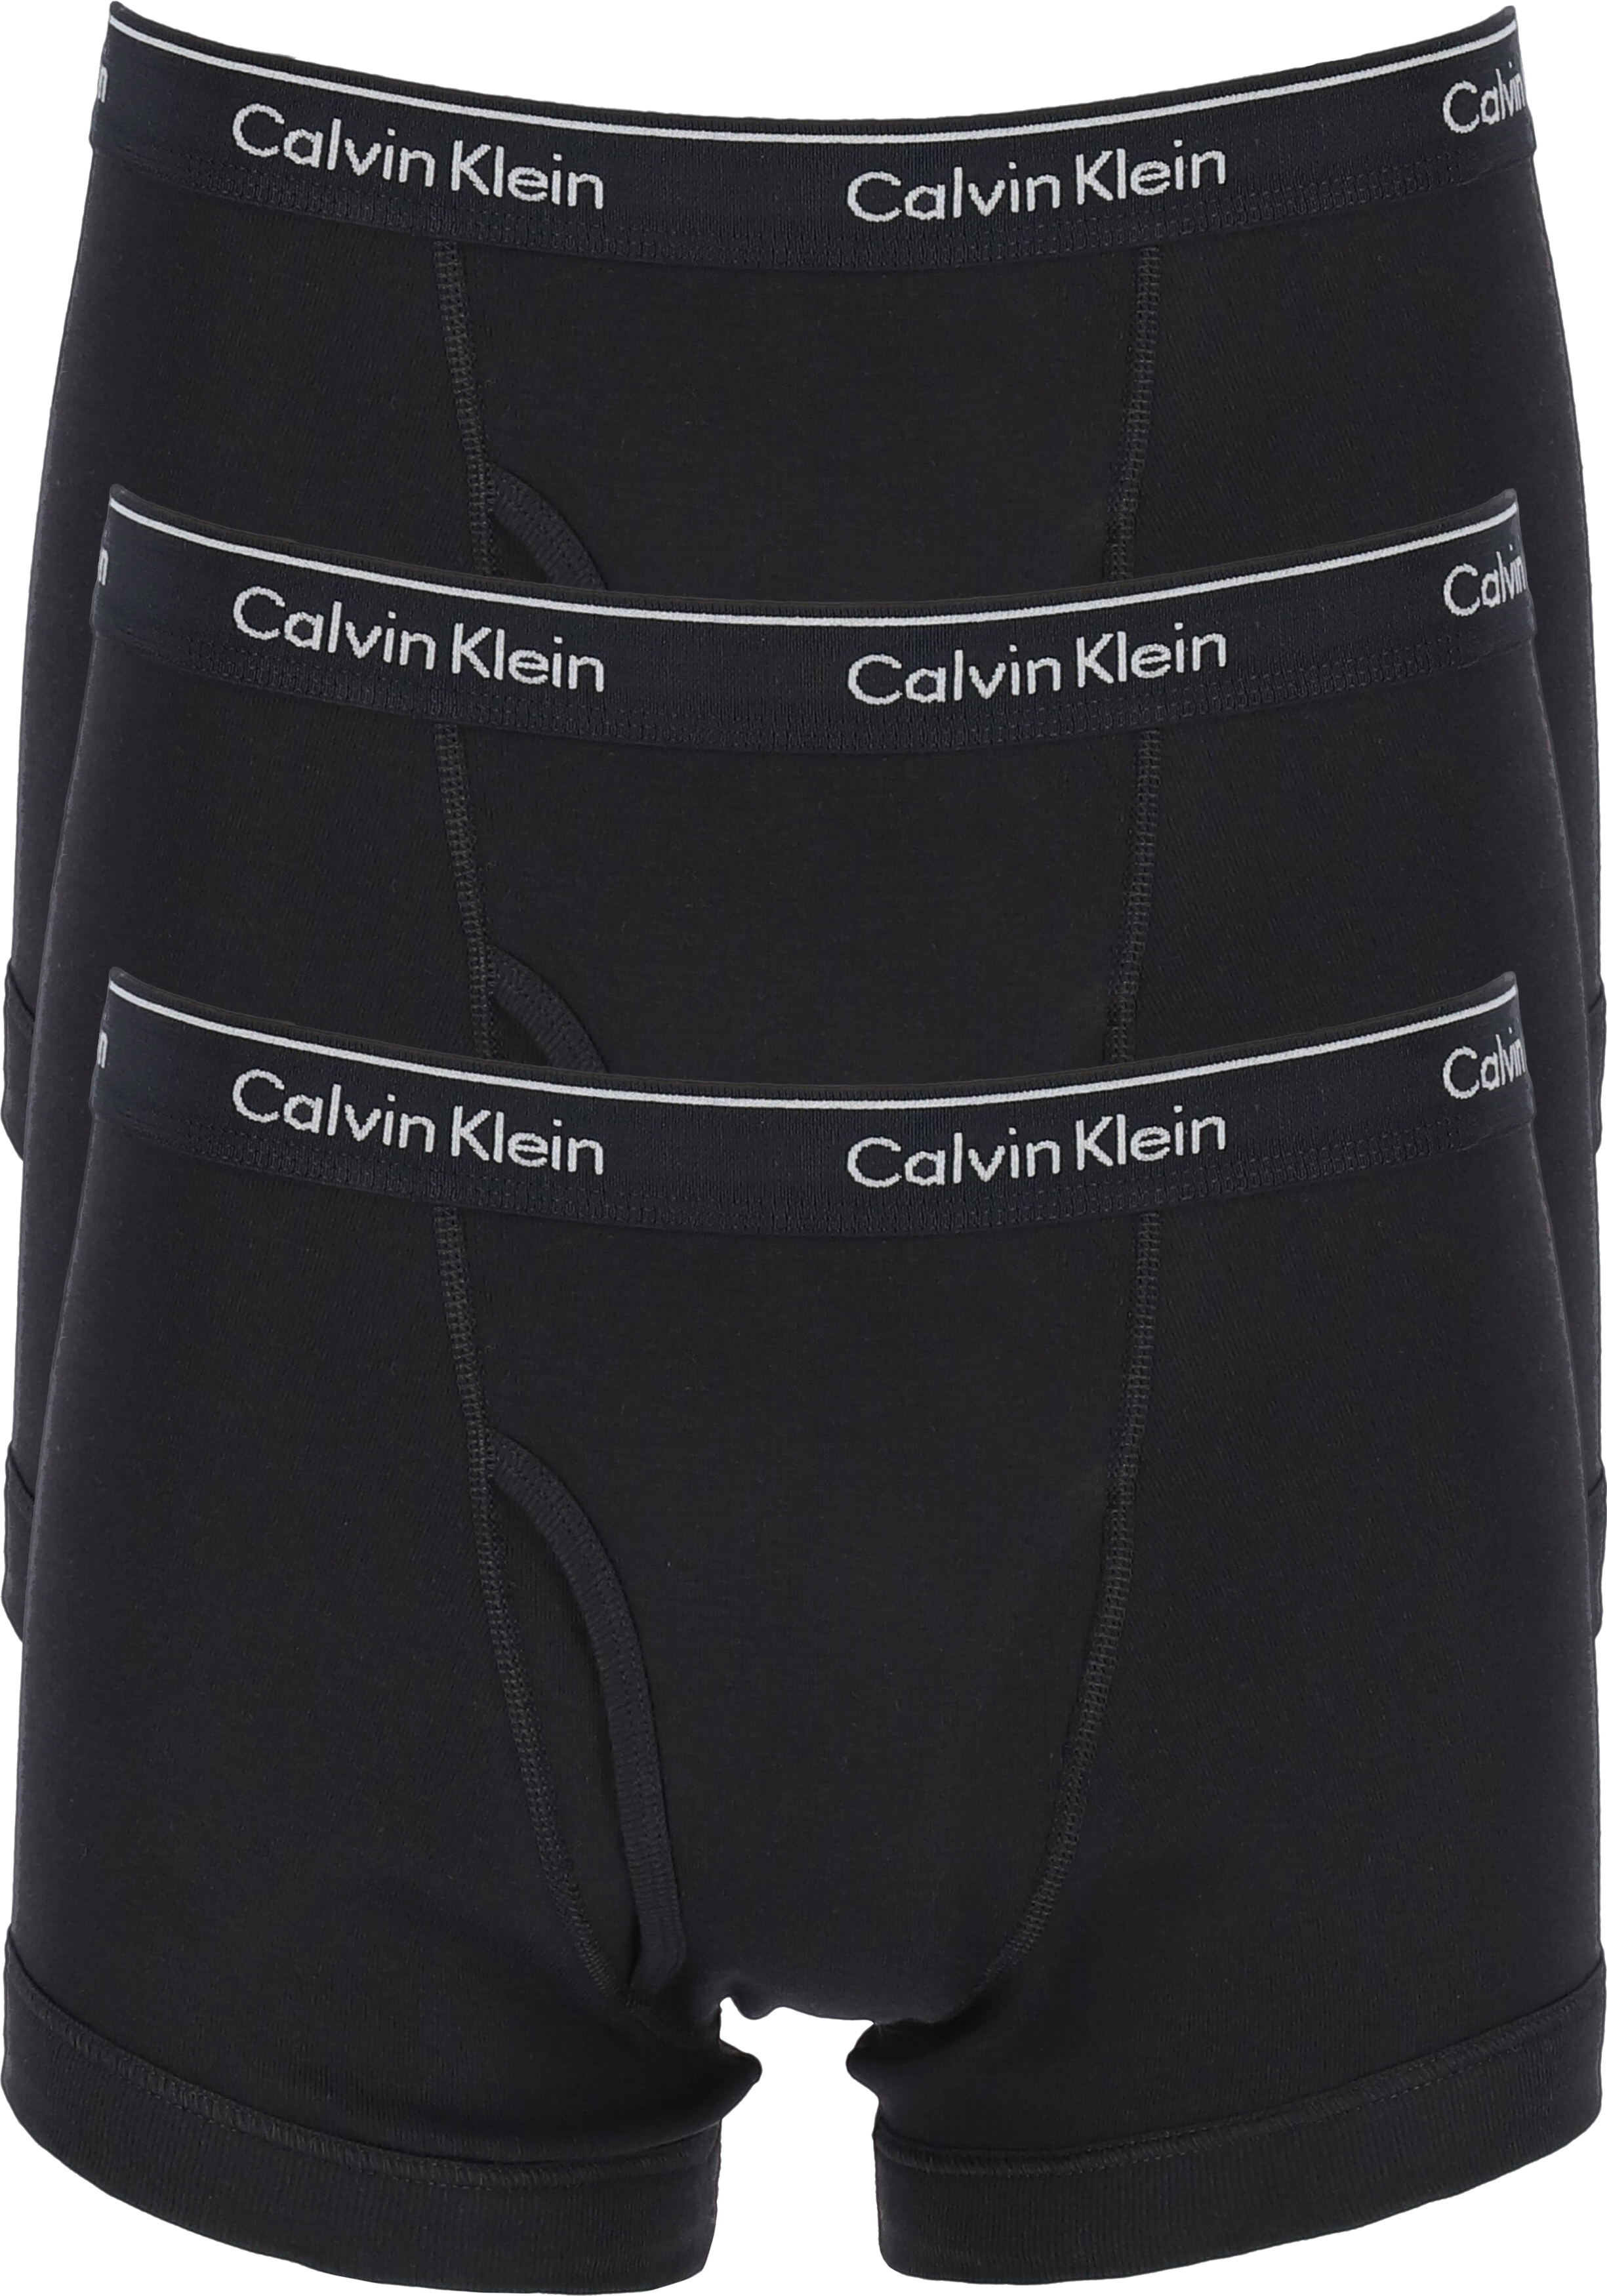 Calvin Klein trunks (3-pack), heren boxer normale lengte met gulp, zwart